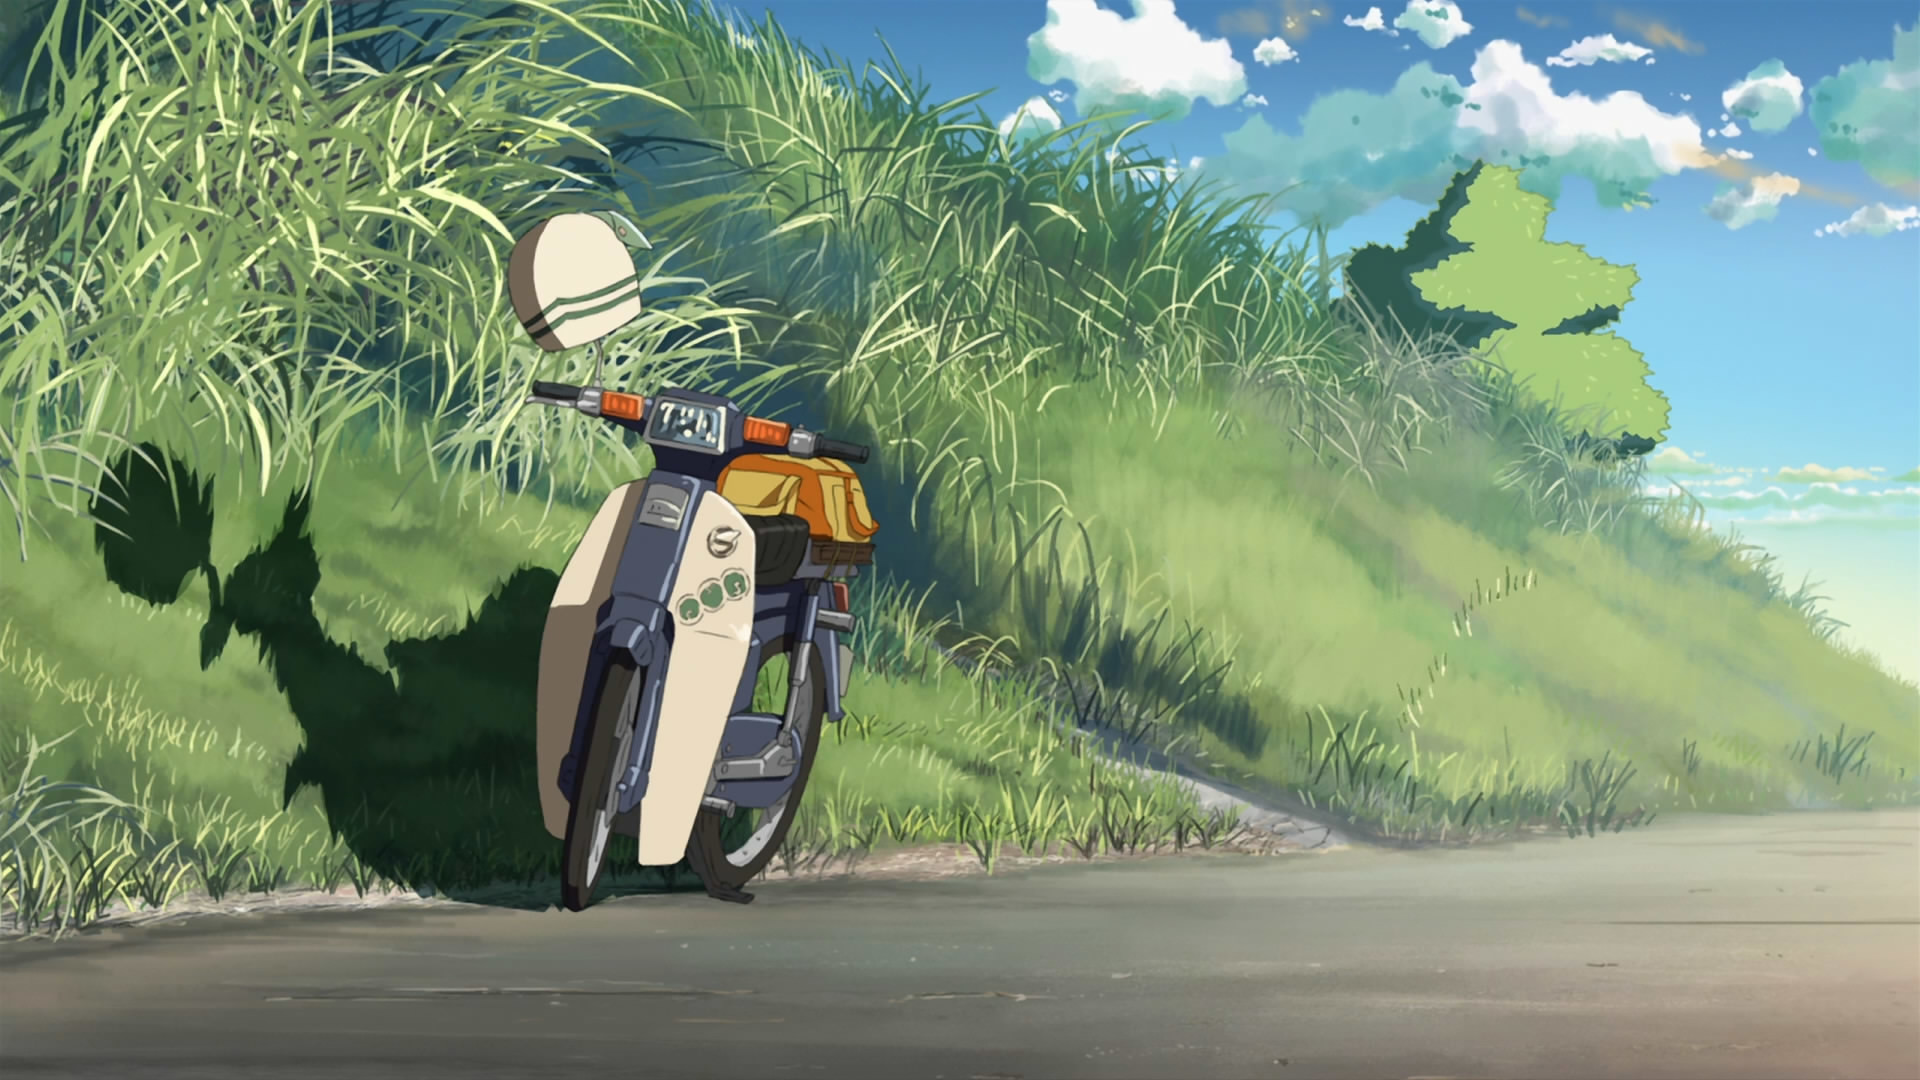 1920x1080 Makoto Shinkai 5 Centimeters Per Second anime motorbikes wallpaper |   | 209383 | WallpaperUP